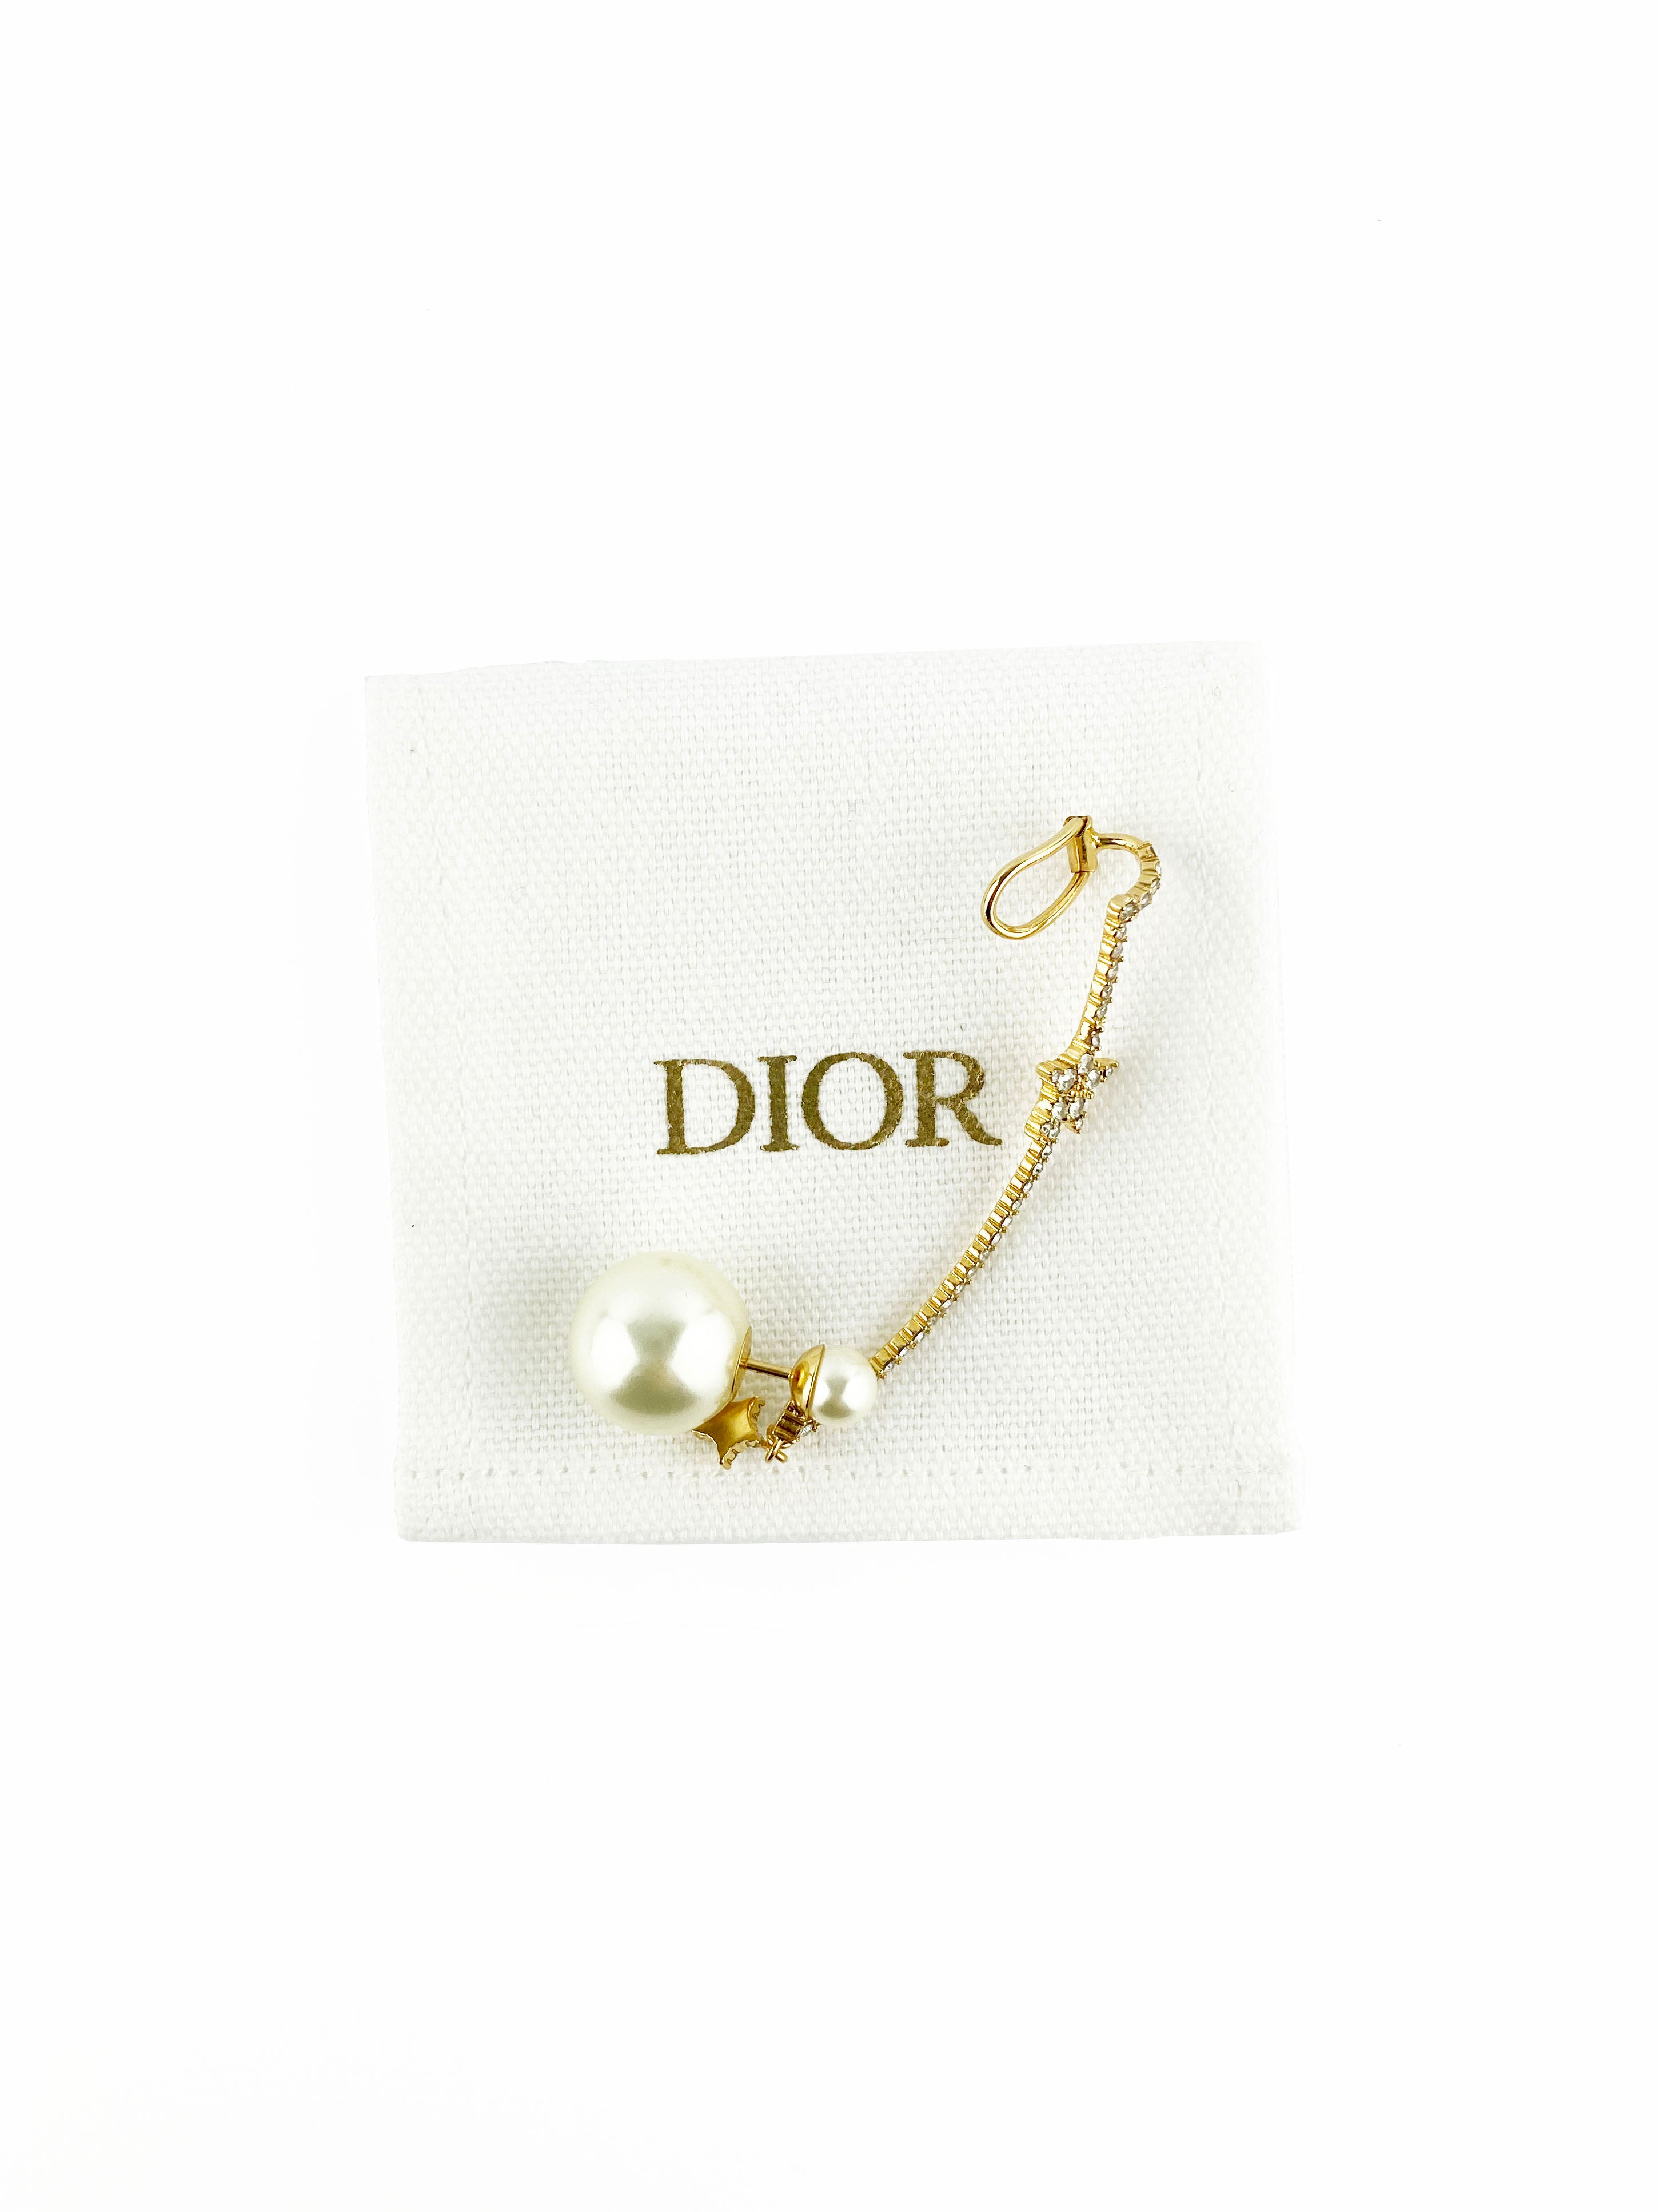 Dior Single Earring and Ear Cuff